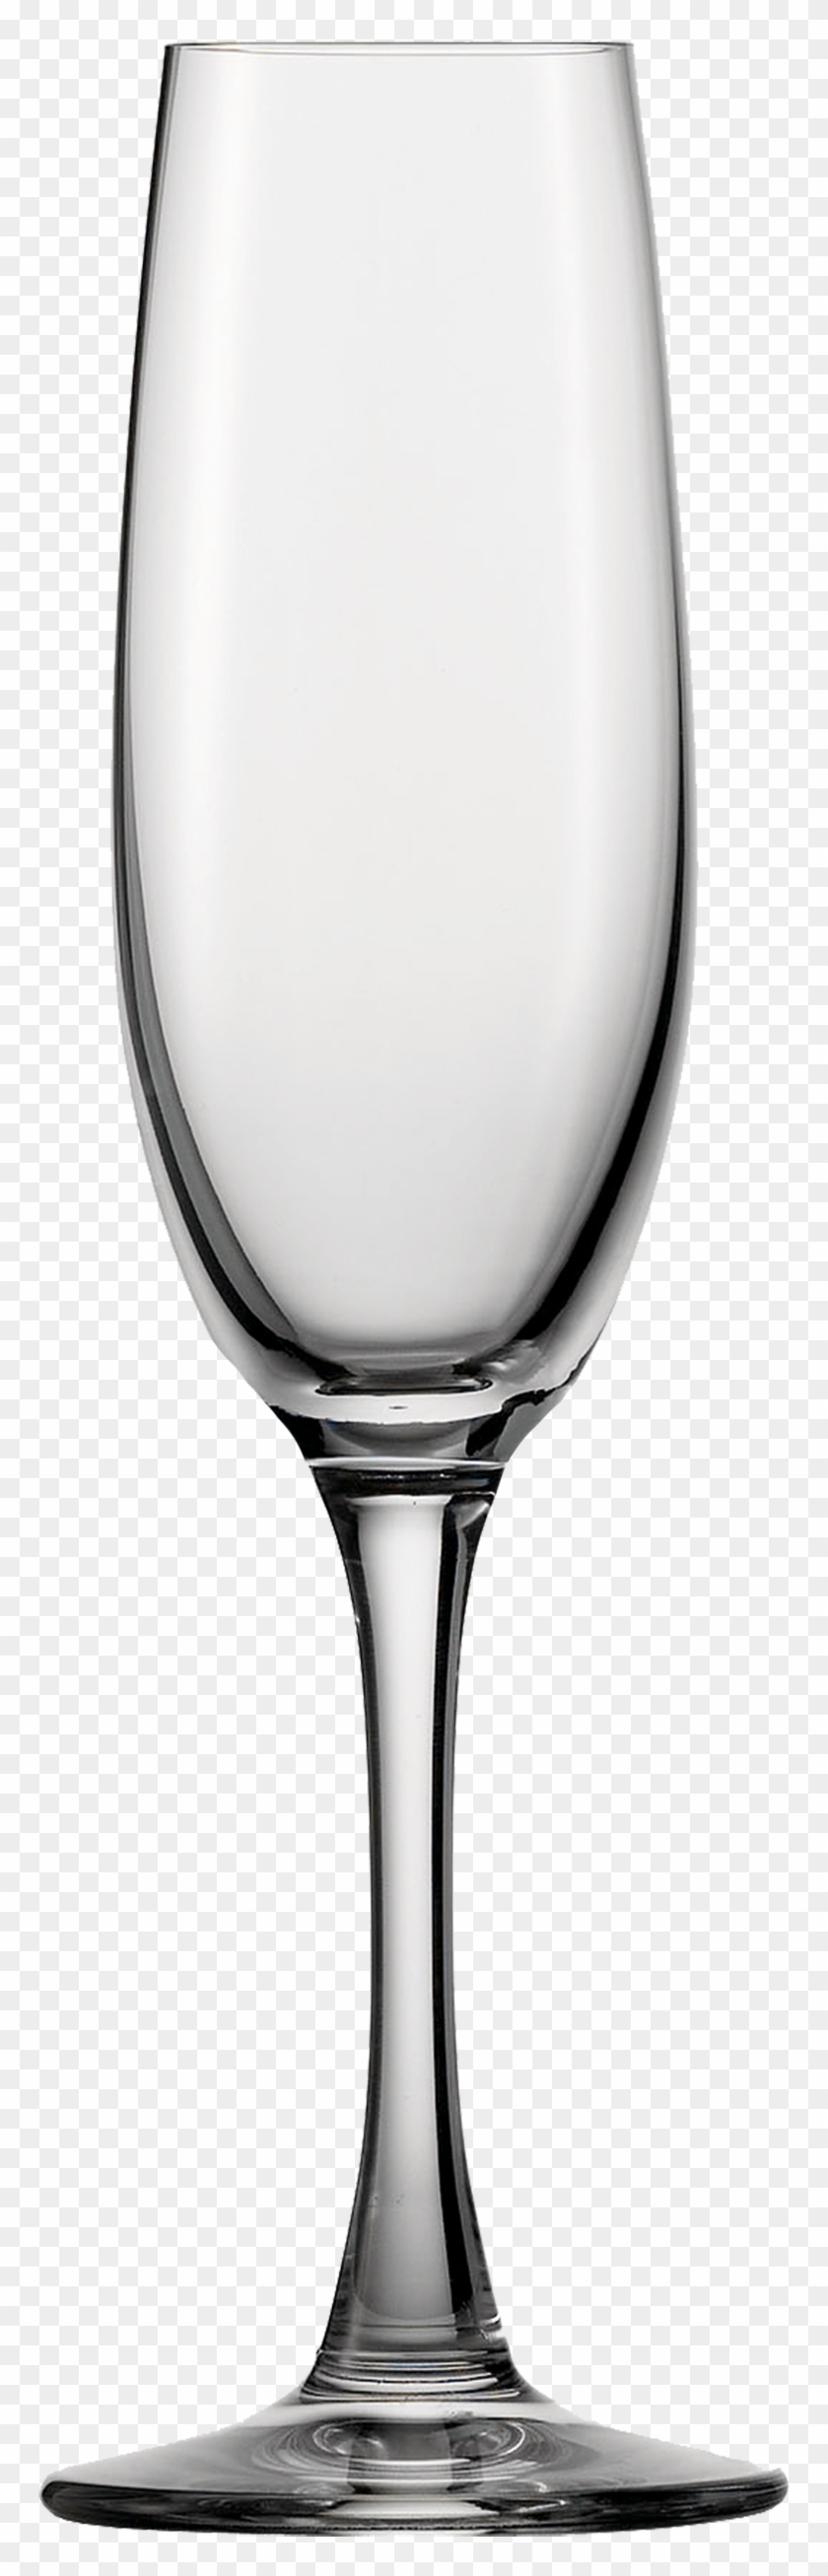 Personalized Champagne Flute Glass - Spiegelau Champagne Flutes Clipart #31386